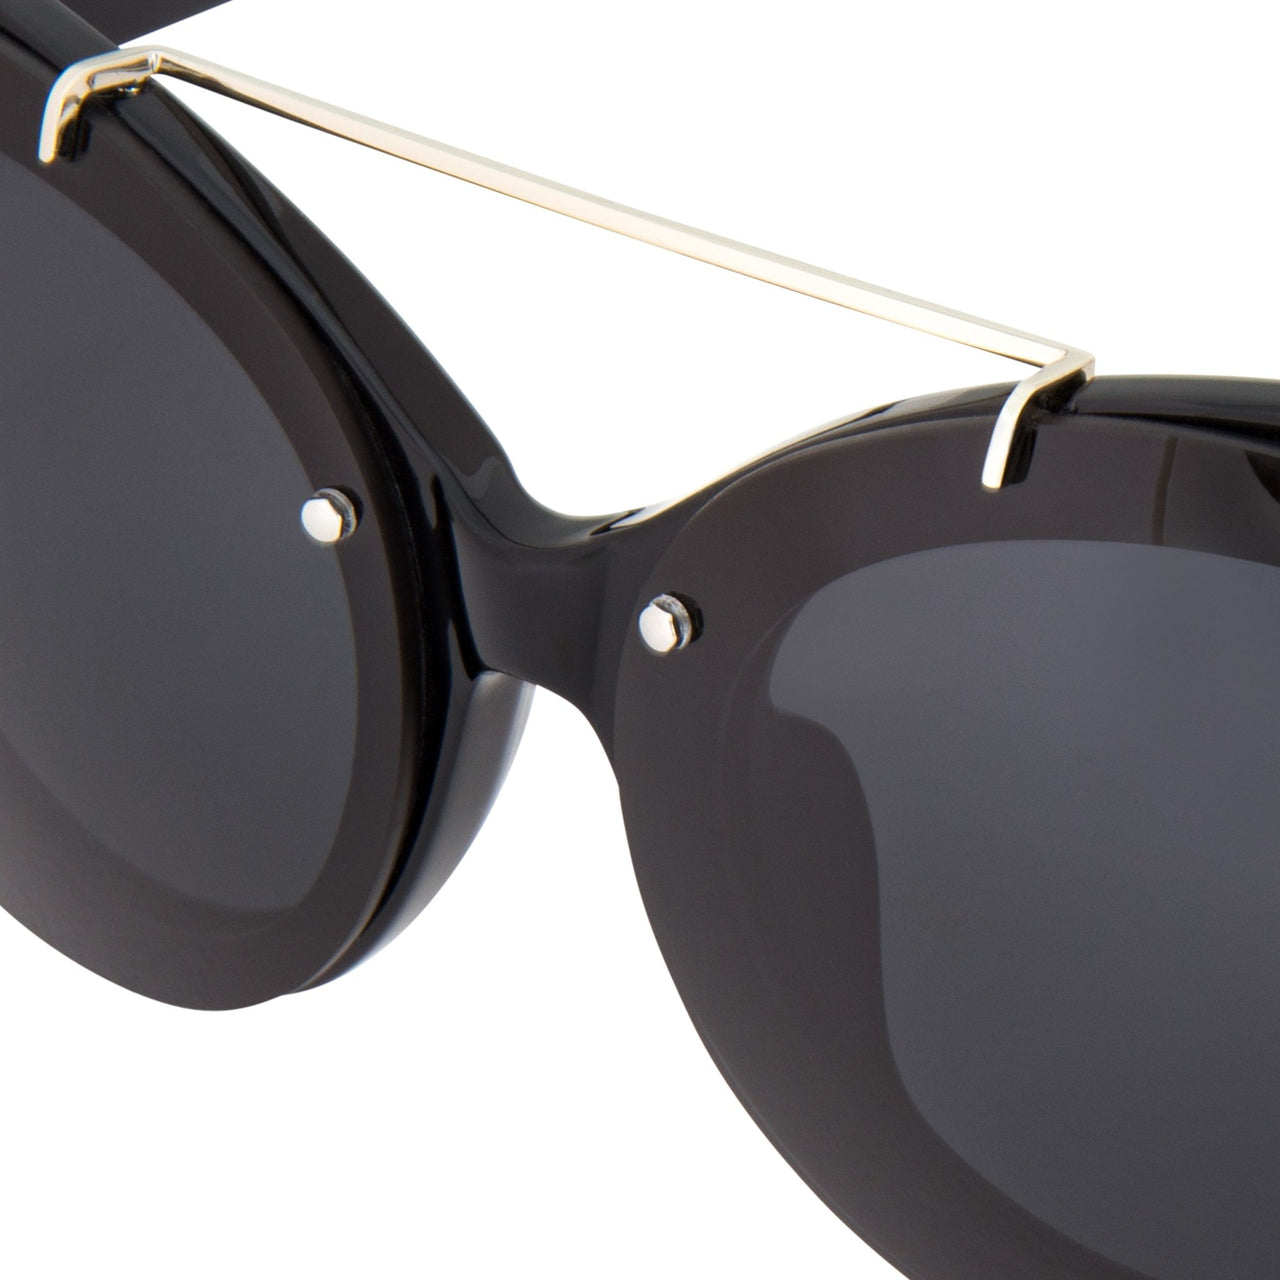 Phillip Lim Sunglasses Cat Eye Female Black CAT4 Dark Tint Bang Bang Black Lenses - PL167C1SUN - Watches & Crystals